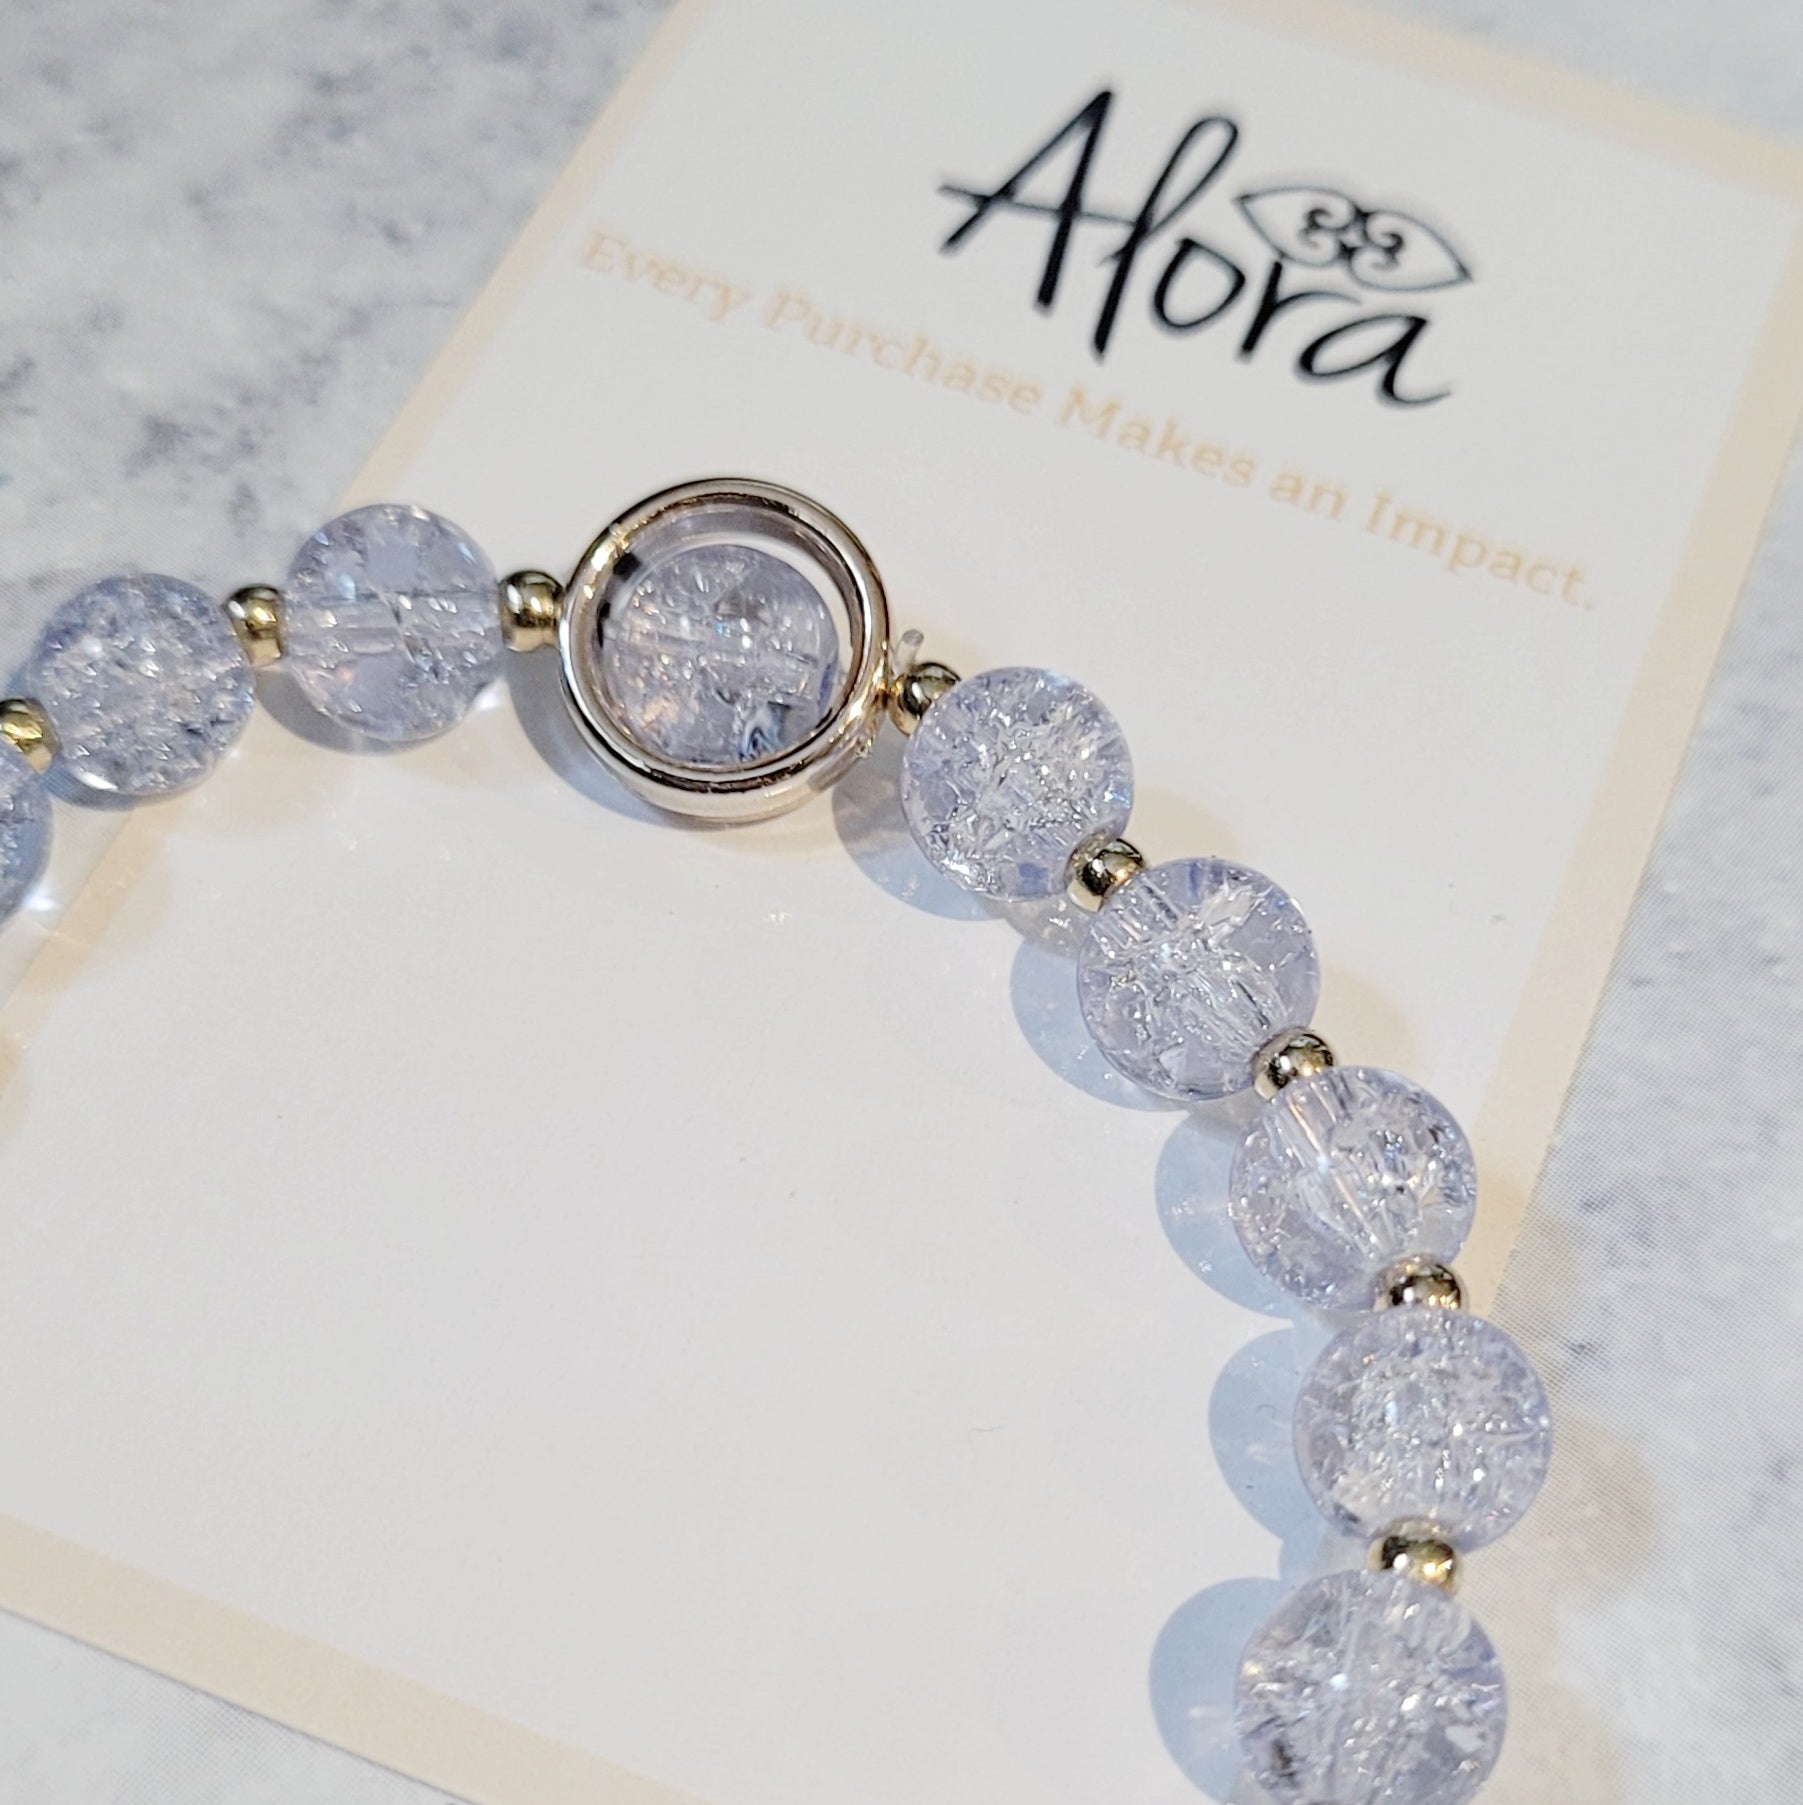 Charmed Gems - Alora Boutique